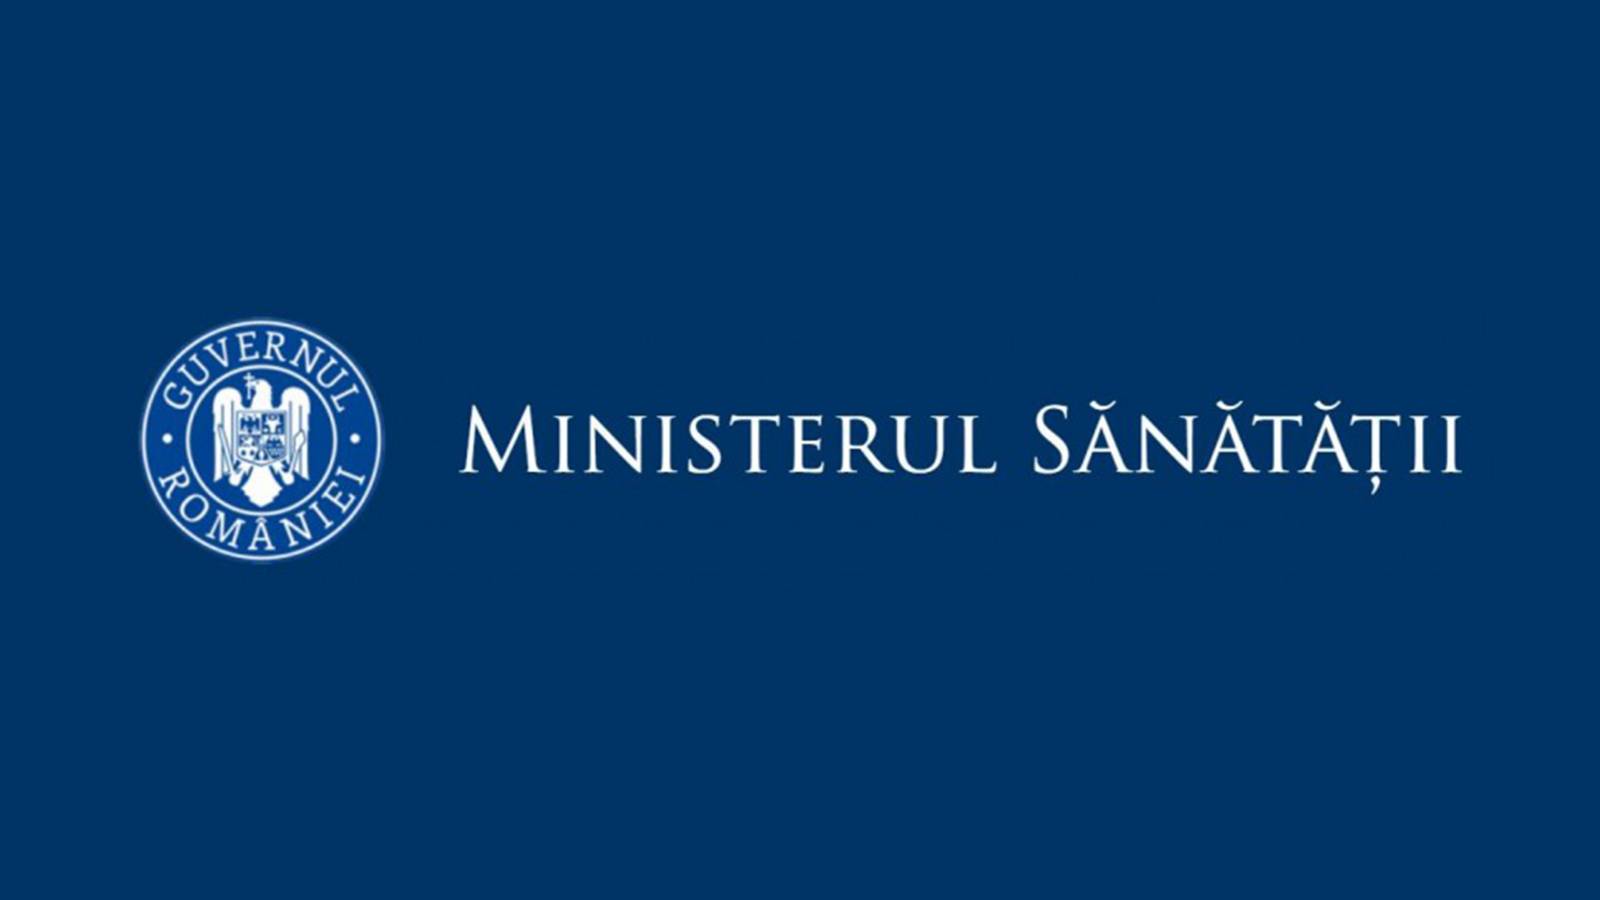 Ministerul Sanatatii Vindecarile Persoanele Izolate Carantinate